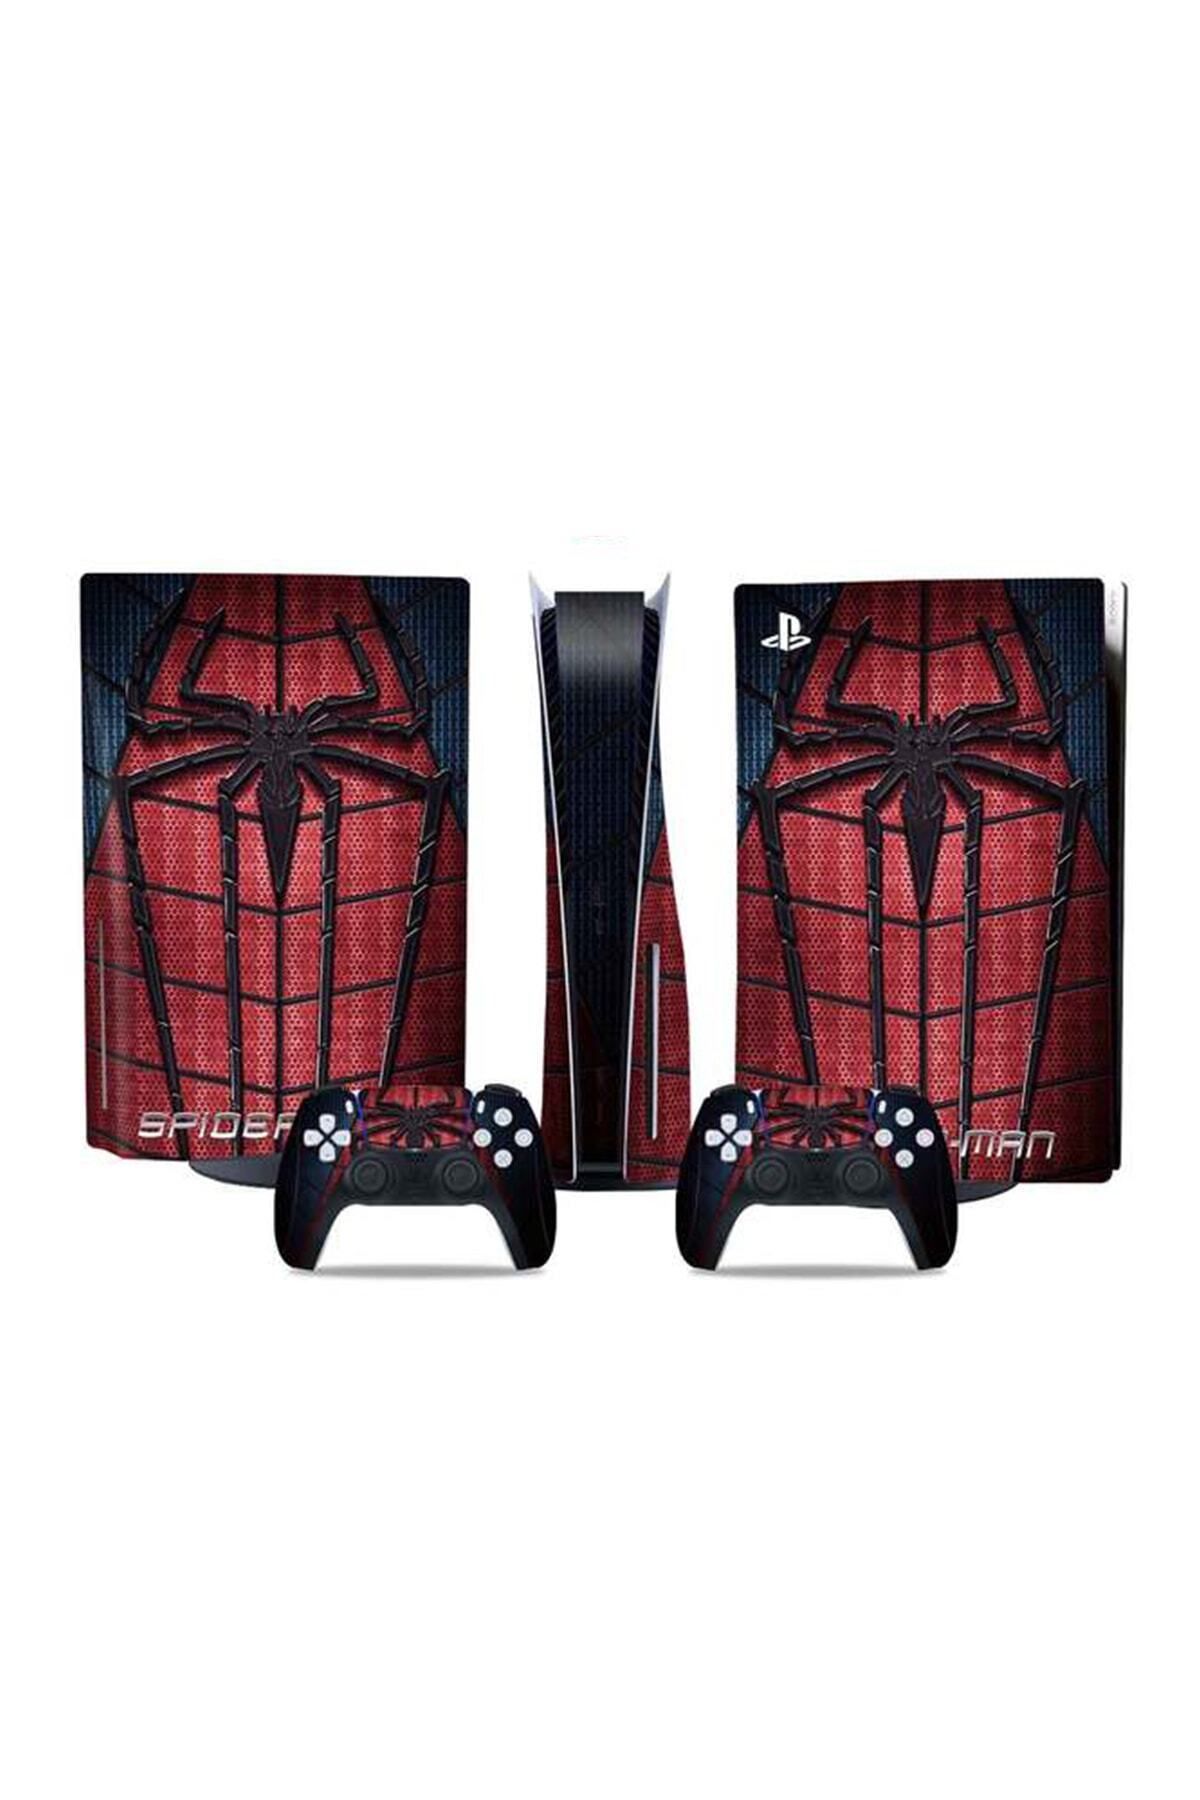 Kt Grup Marvel Spiderman Logo Playstation 5 Standart Disk Edition Sticker Kaplama Seti